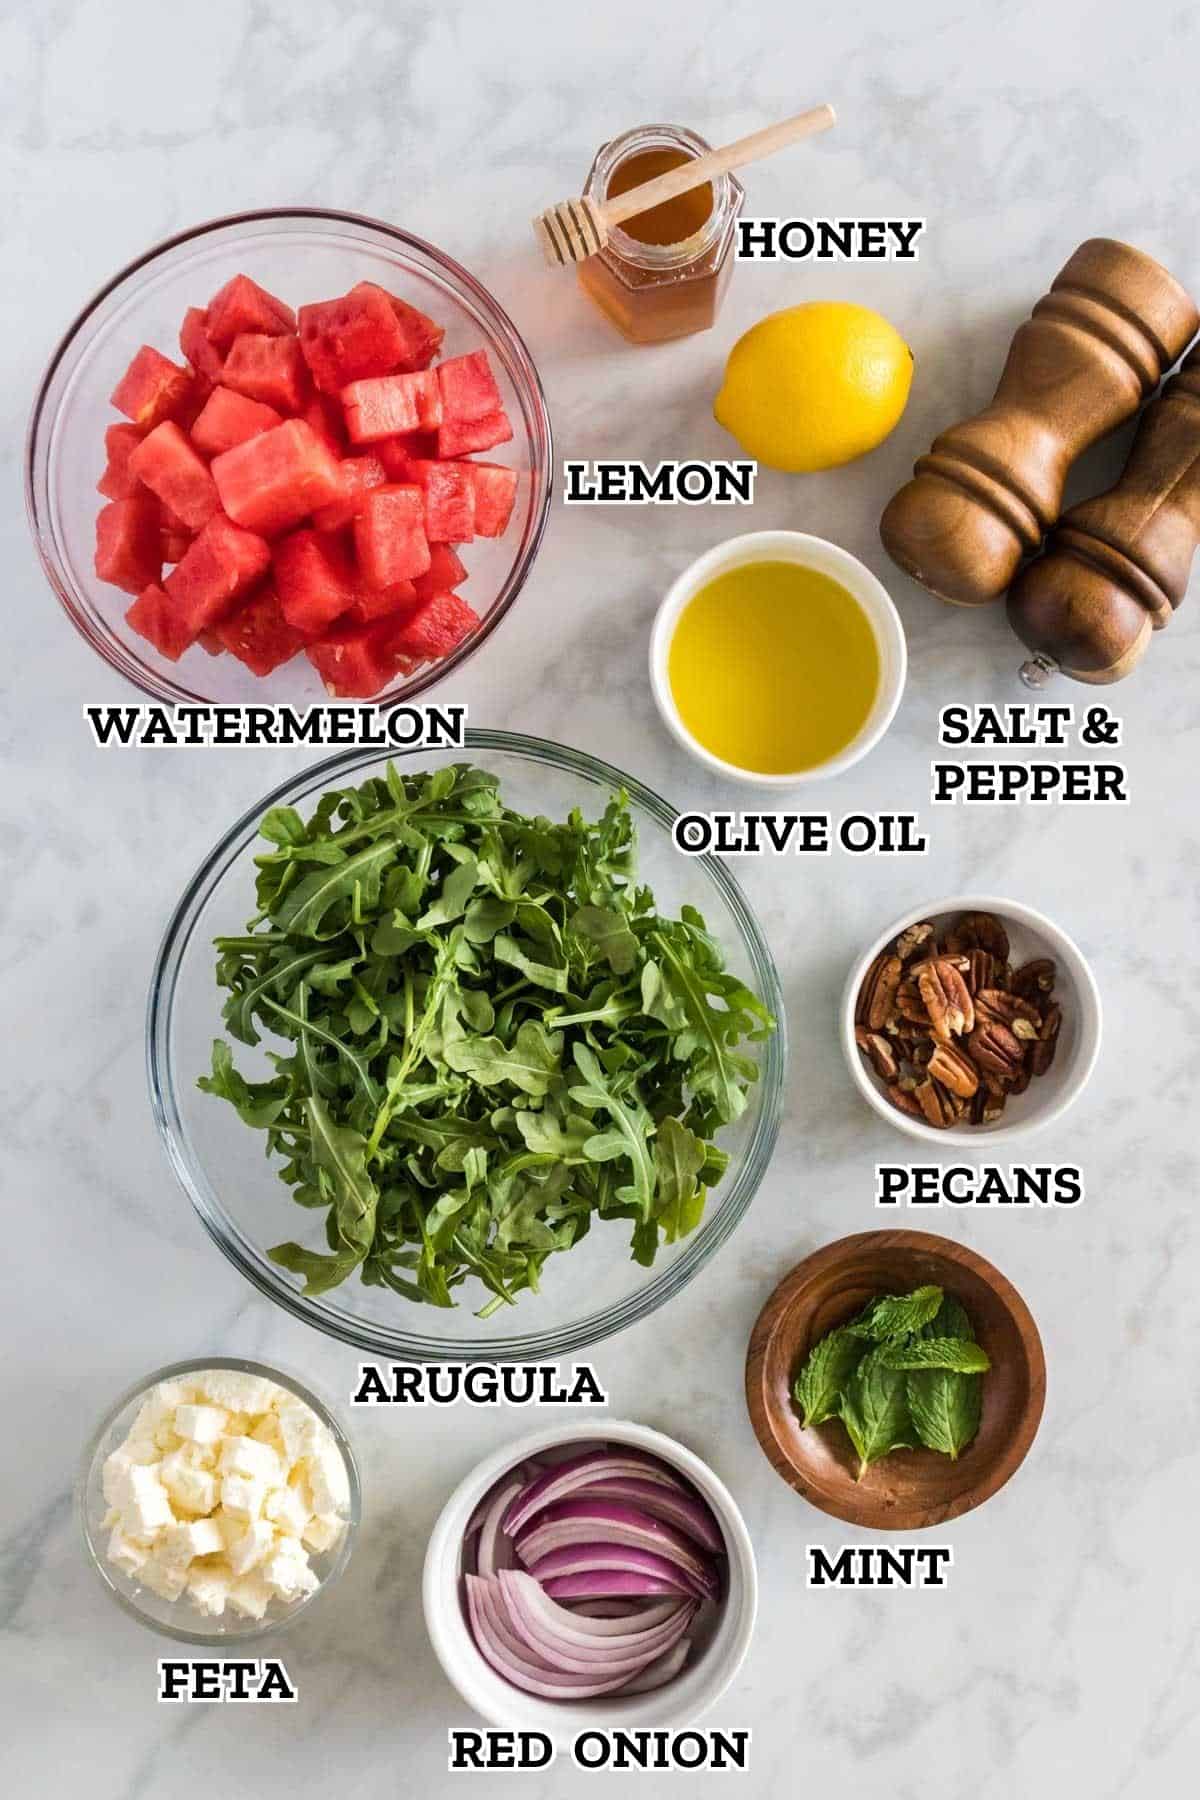 Image of labeled ingredients needed to make watermelon arugula feta salad.